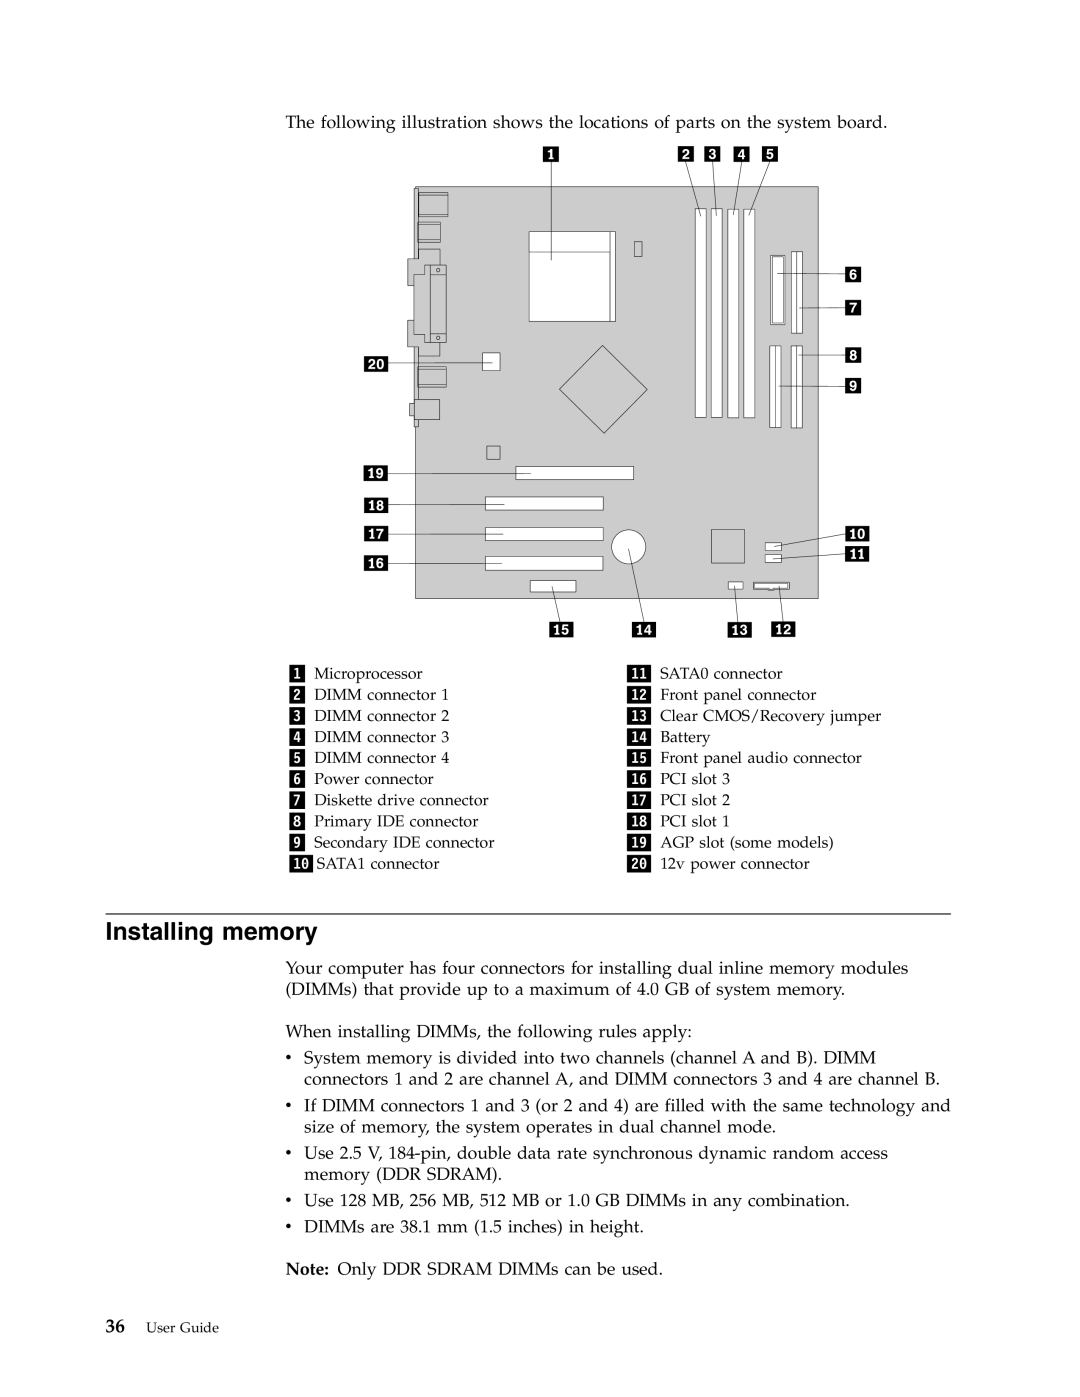 Lenovo M50e Series, A50 manual Installing memory, 36User Guide 